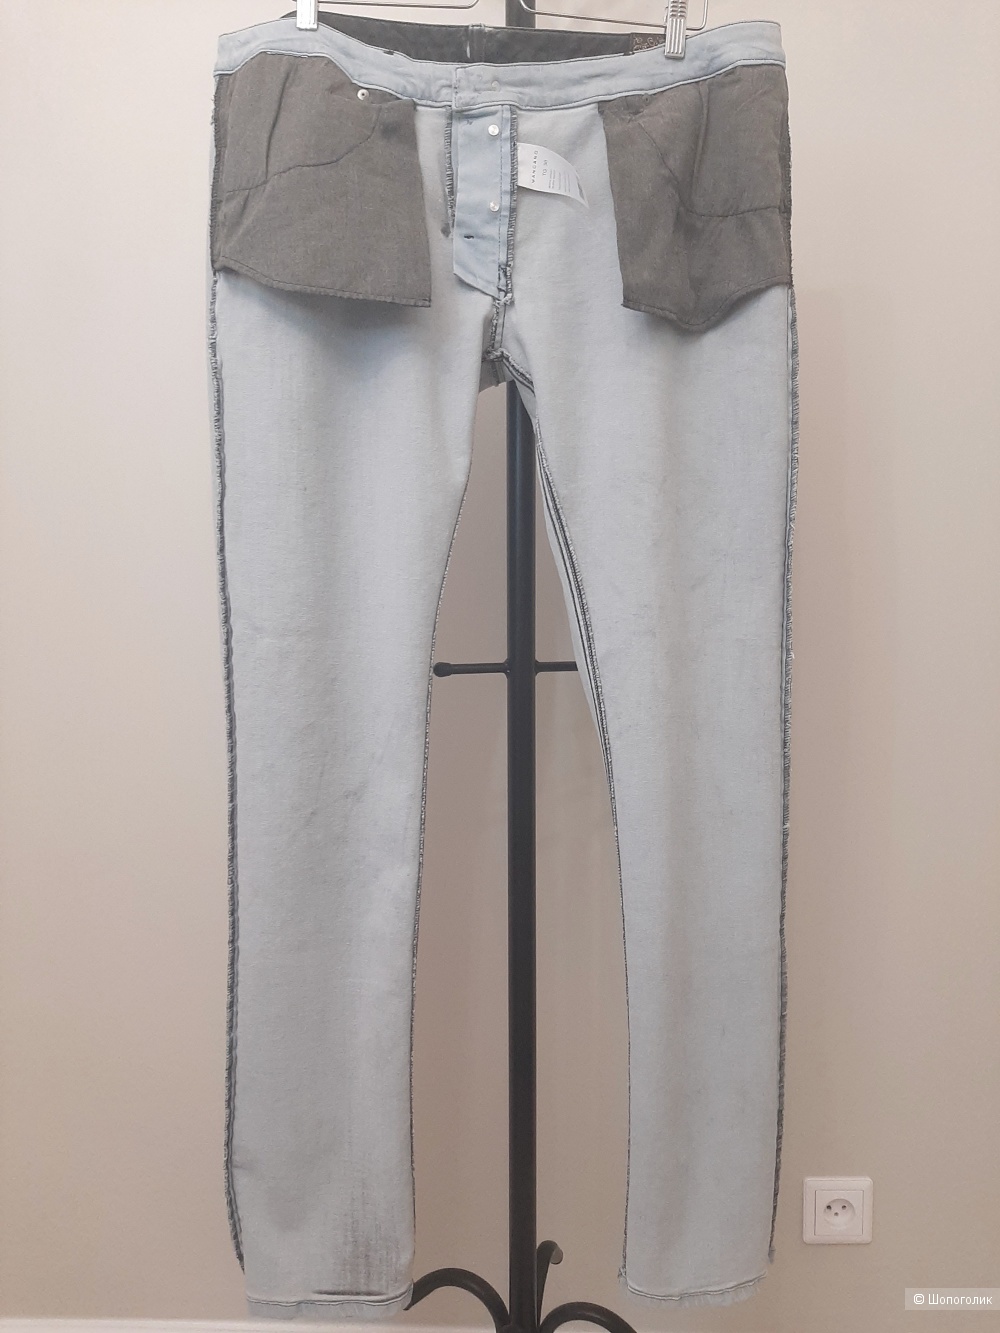 Мужские джинсы Mangano, W38 (54)